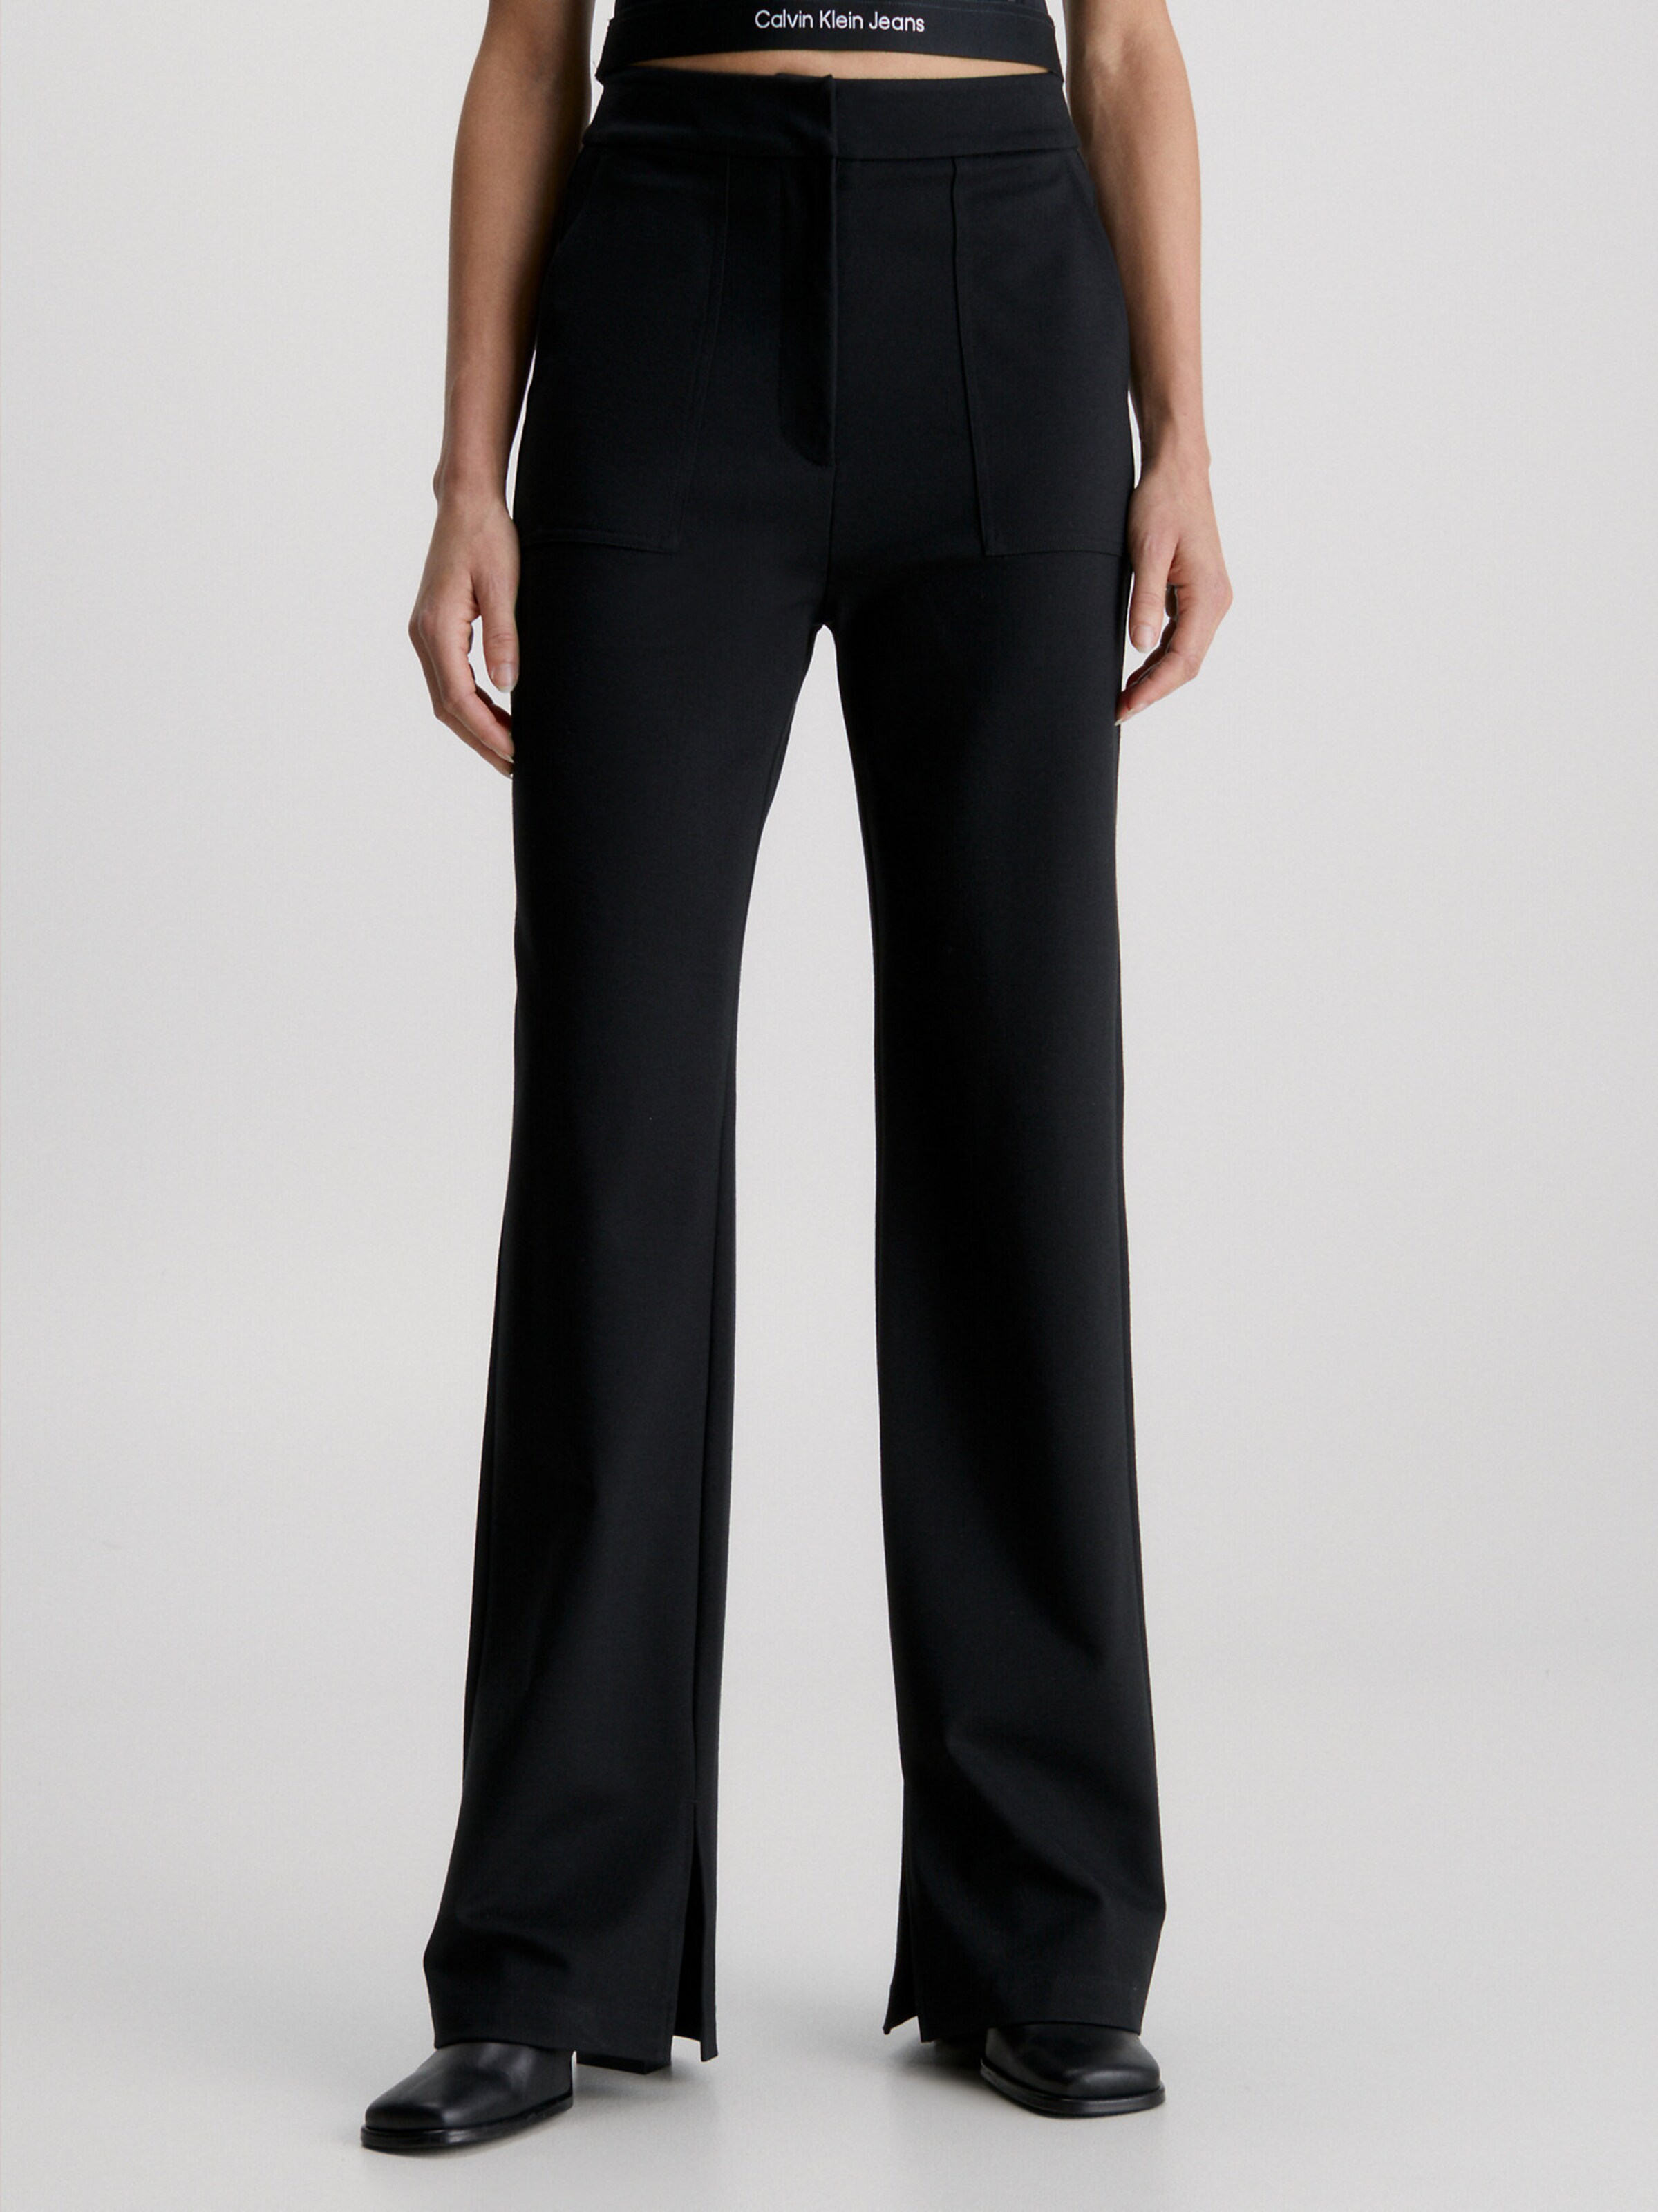 Calvin Klein Jeans technical cargo trousers in black | ASOS